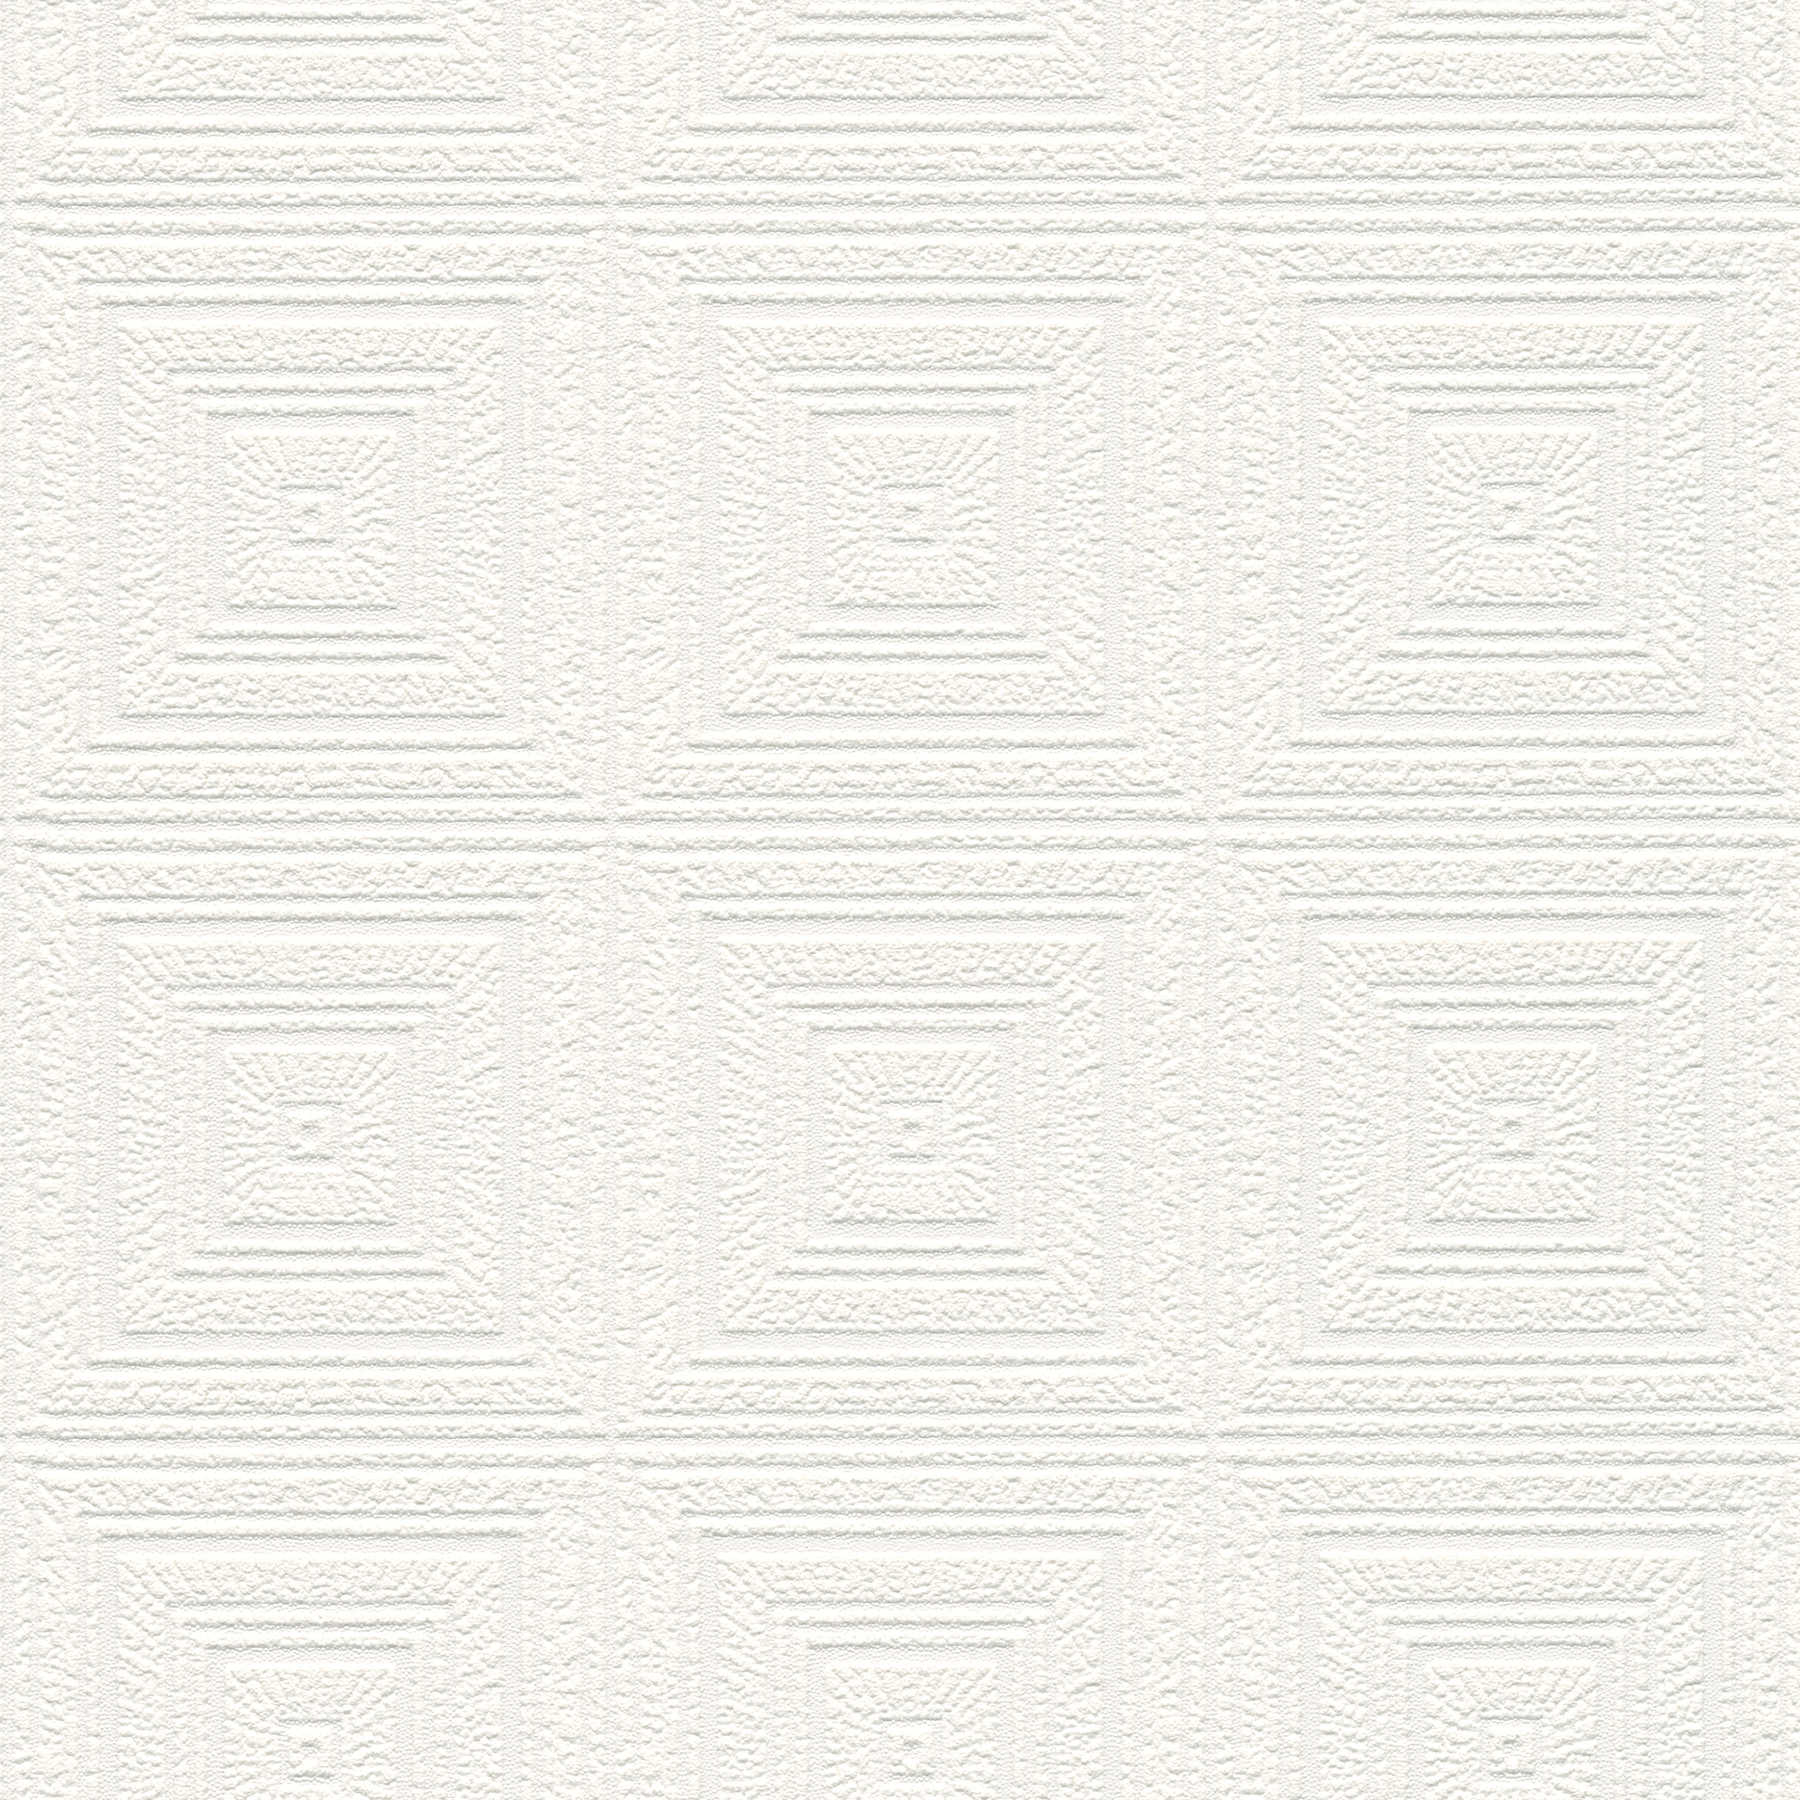 Paper wallpaper decor cassettes texture effect & plaster look - white
